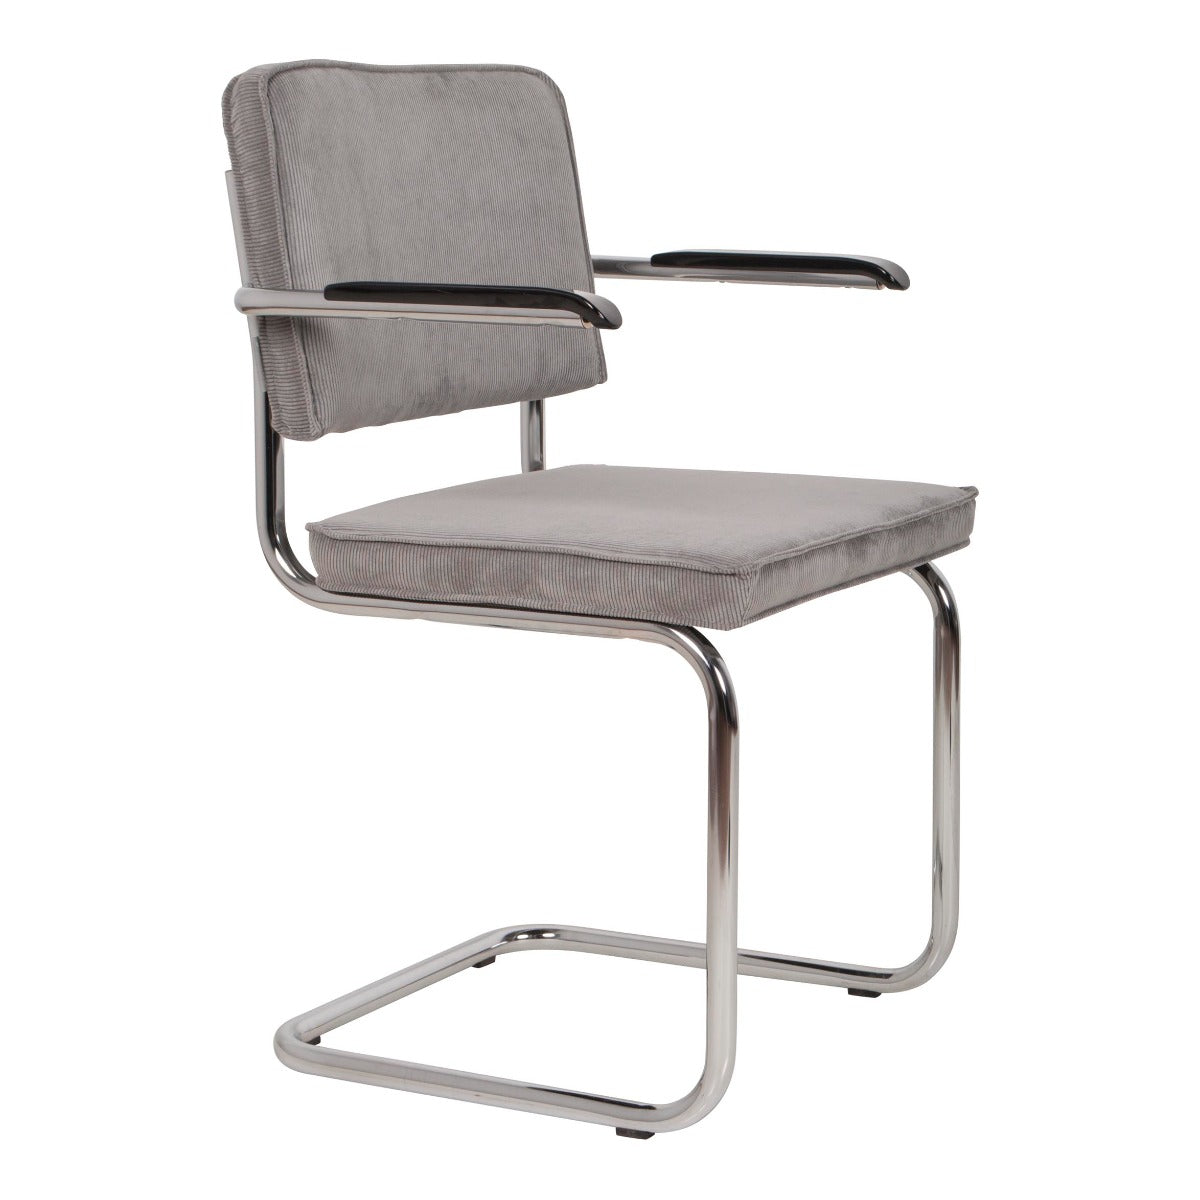 RIDGE RIB chair with armrests grey